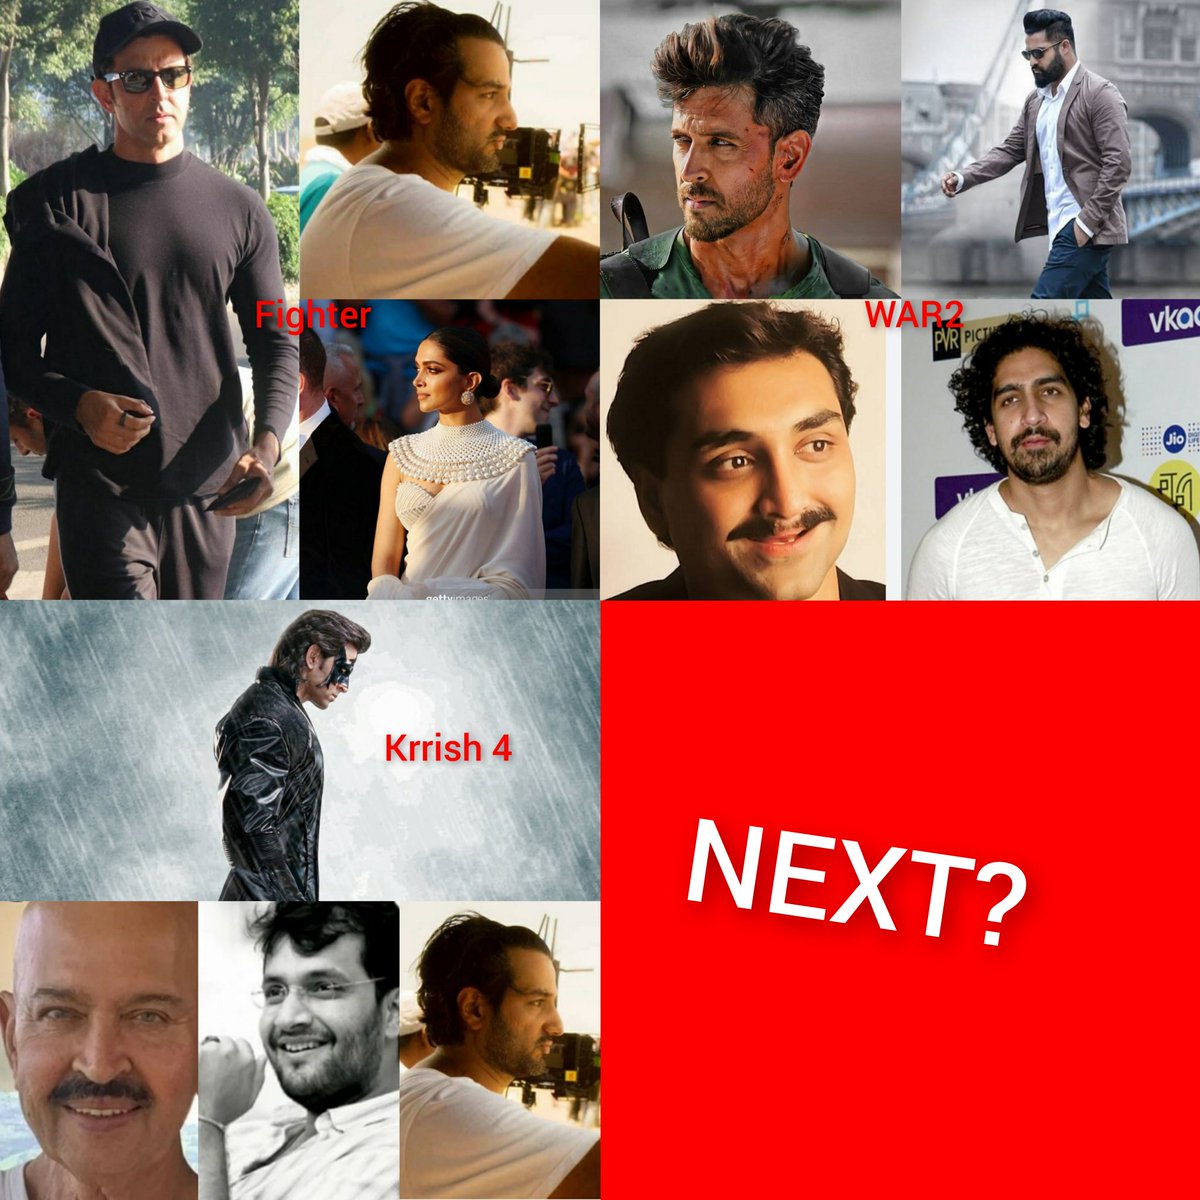 #HrithikRoshan Next project Team
1.#Fighter 💥
#SiddharthAnand(director & producer)
🌟#DeepikaPadukone
2.#WAR2💥
🌟#jnNtr
#AdityaChopra(script &producer)
#AyanMukerji(director)
3.#Krrish4💥 
#RakeshRoshan (script & producer)
#KaranMalhotra (director)
#SiddharthAnand (co-producer)